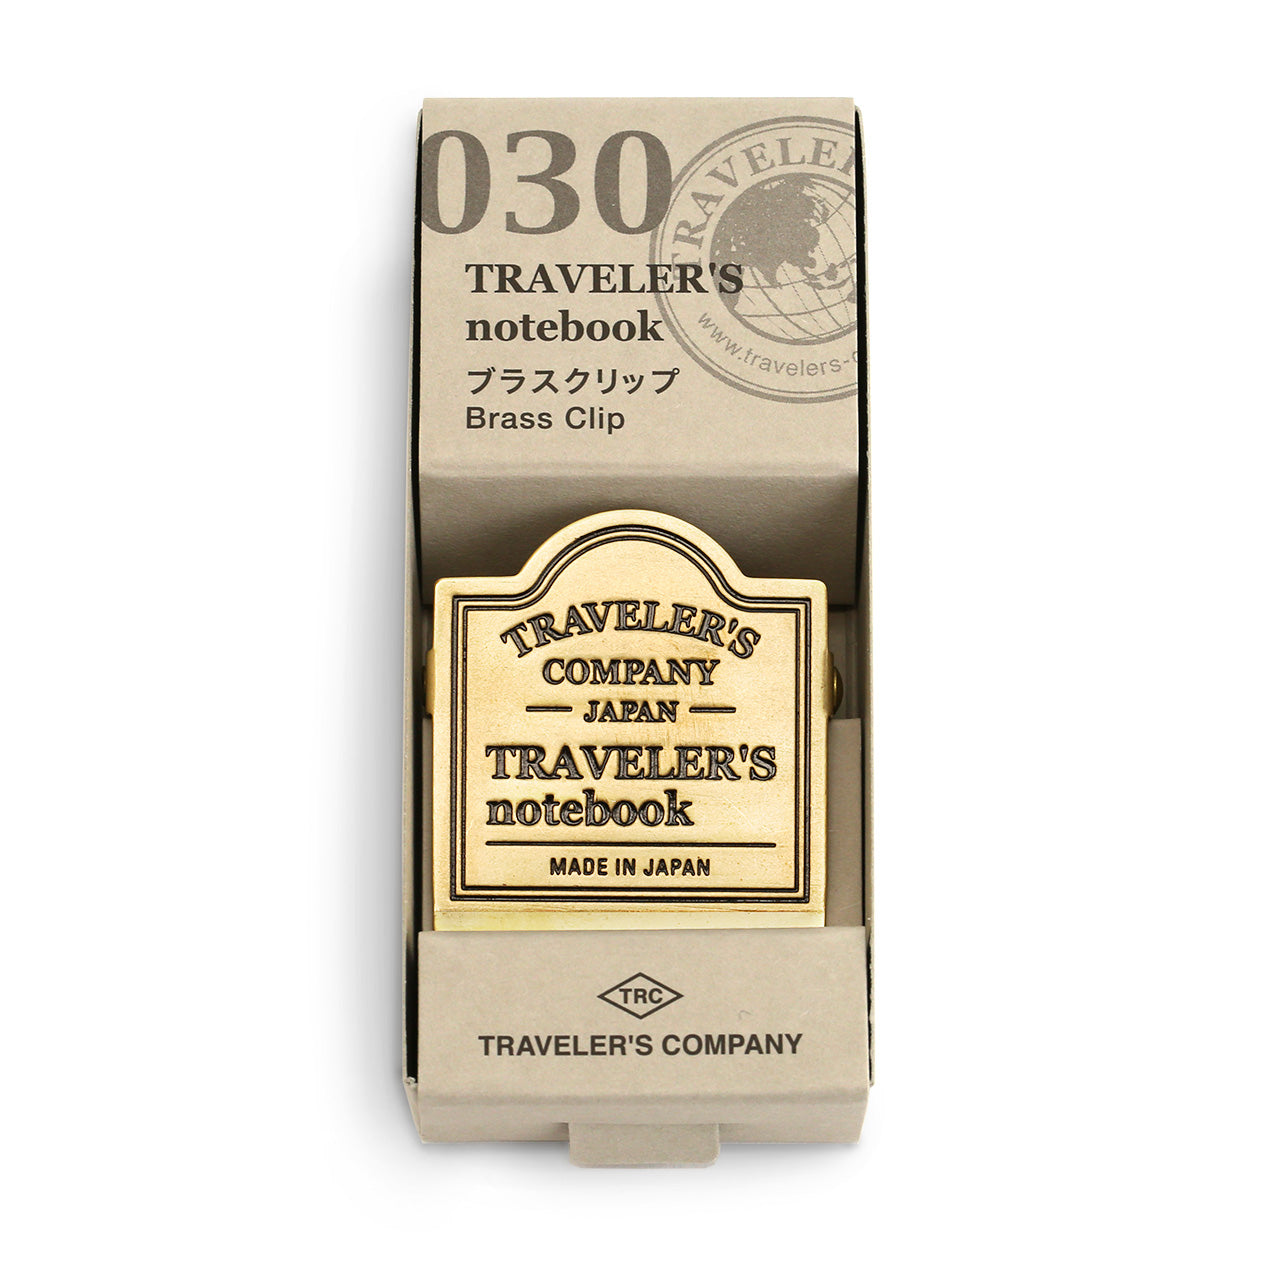 Have a nice trip Traveler's notebook Company Brass Clip